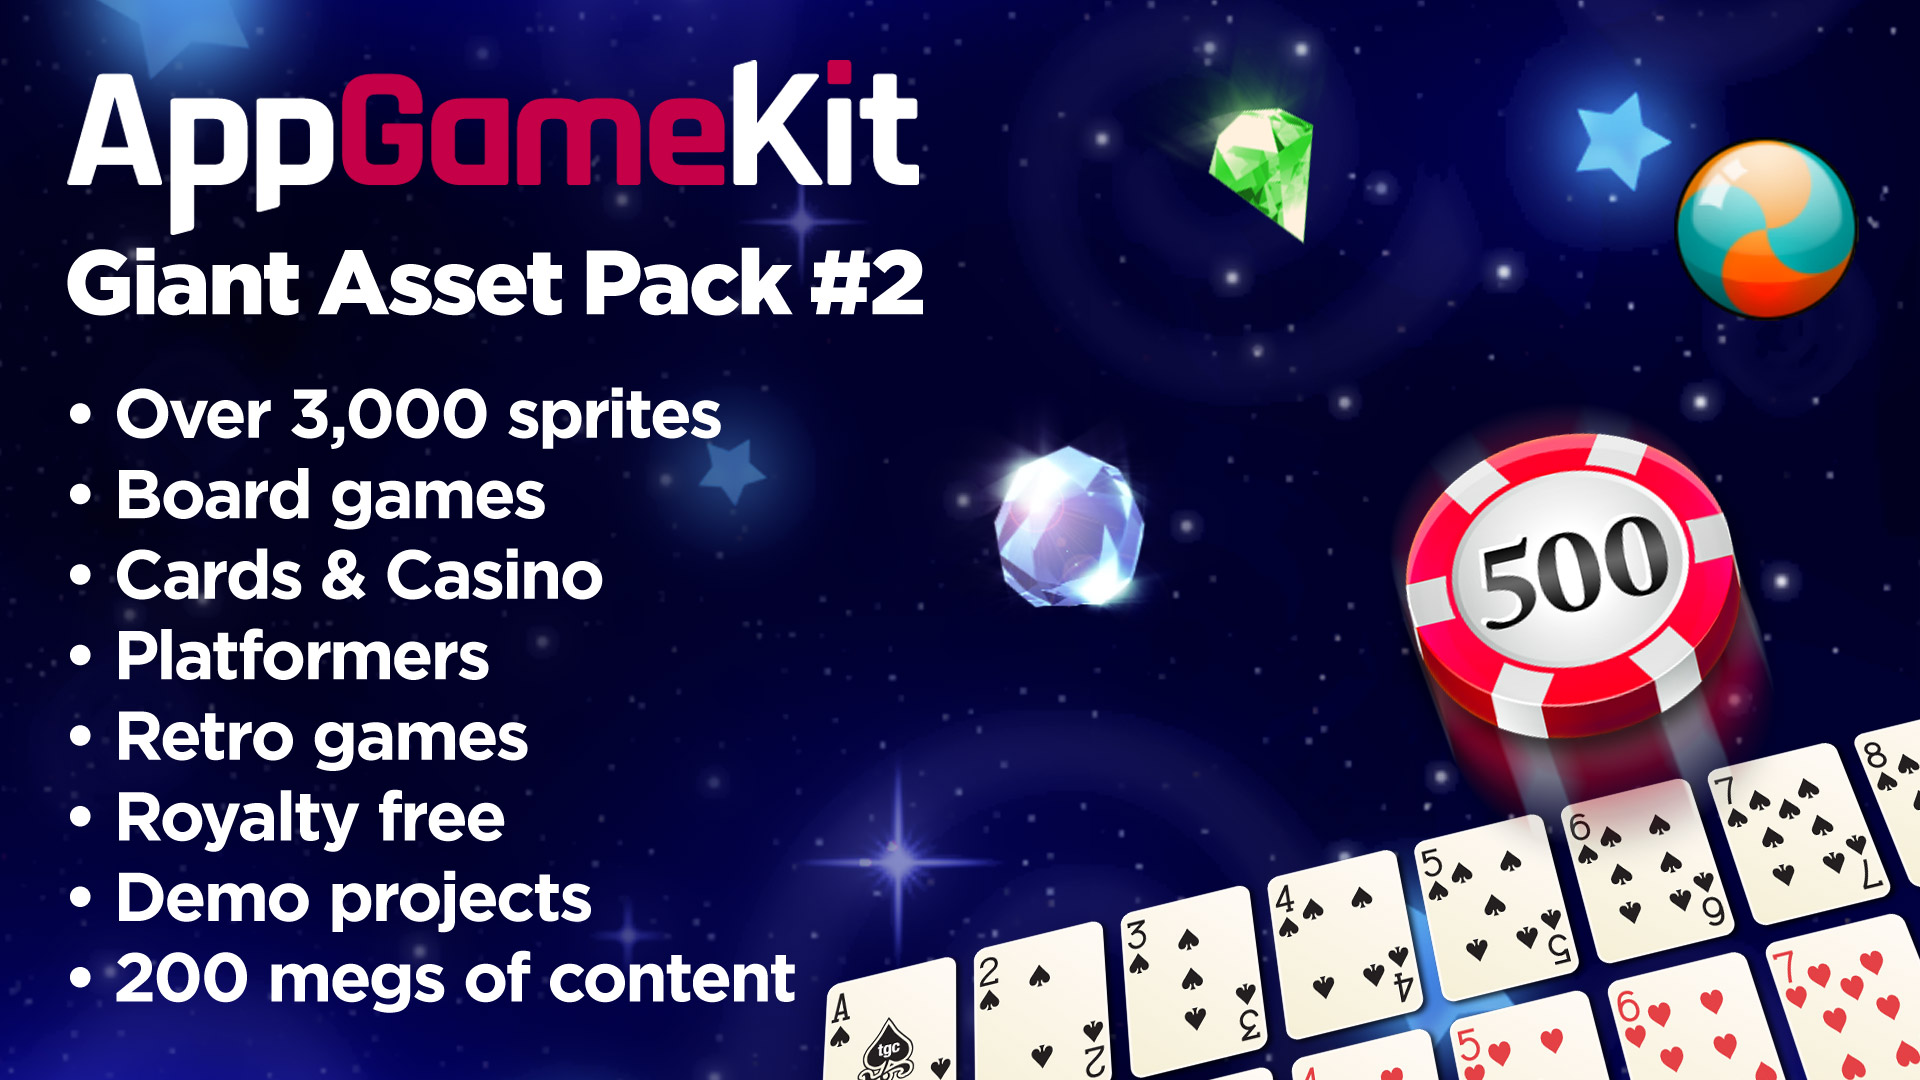 AppGameKit Classic - Giant Asset Pack 2 Featured Screenshot #1